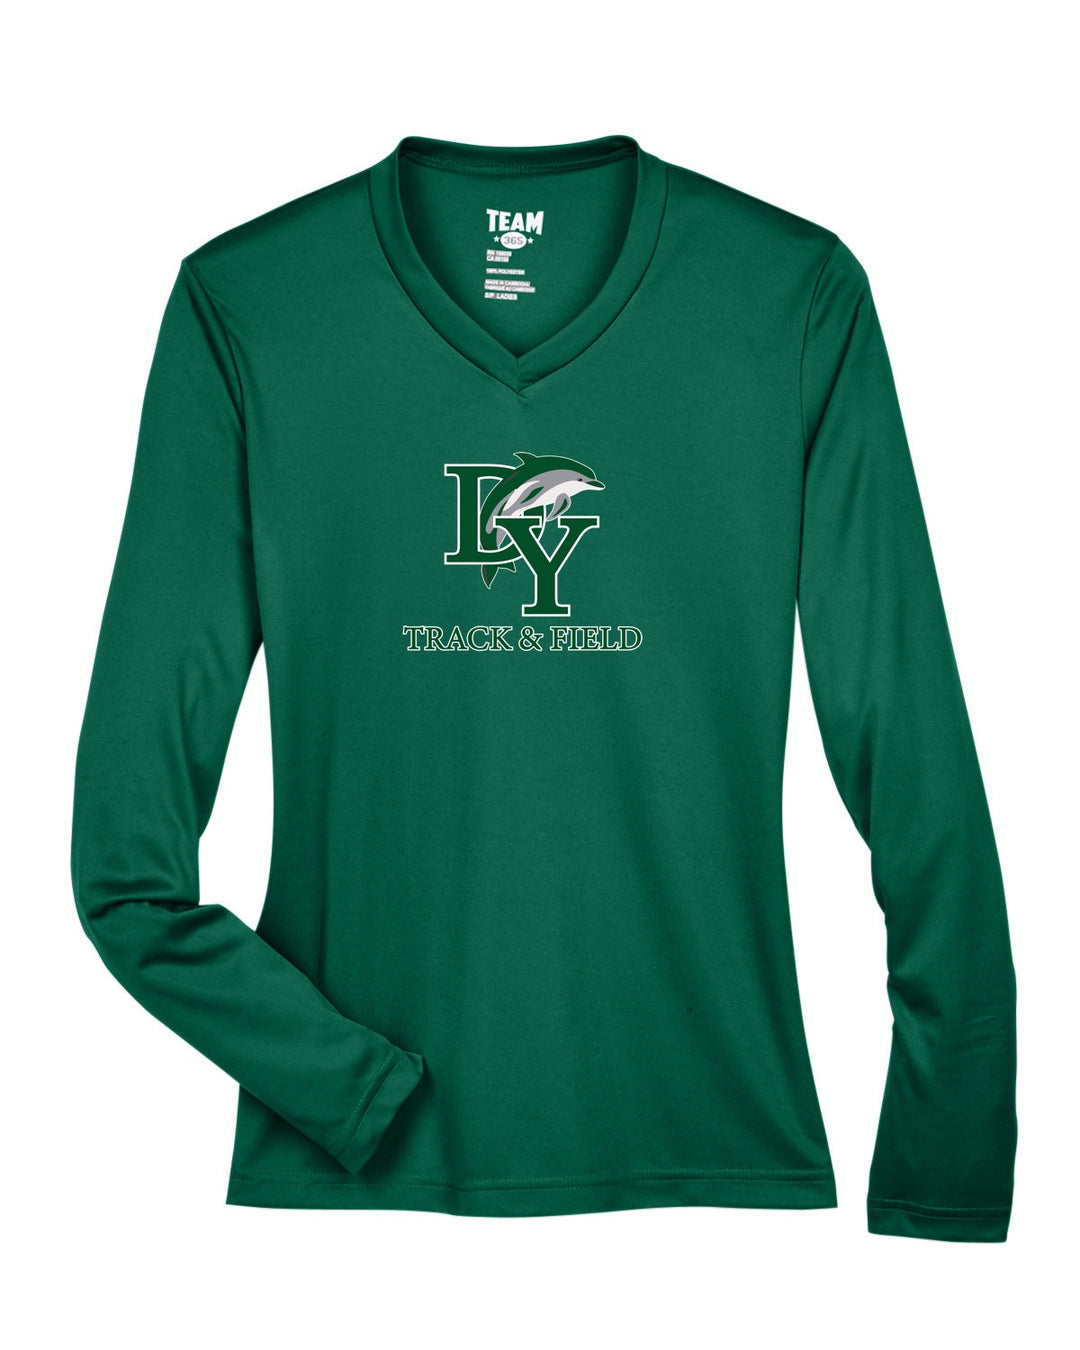 Dennis Yarmouth Track & Field - Team 365 Women's Zone Performance Long Sleeve T-Shirt (TT11WL) (